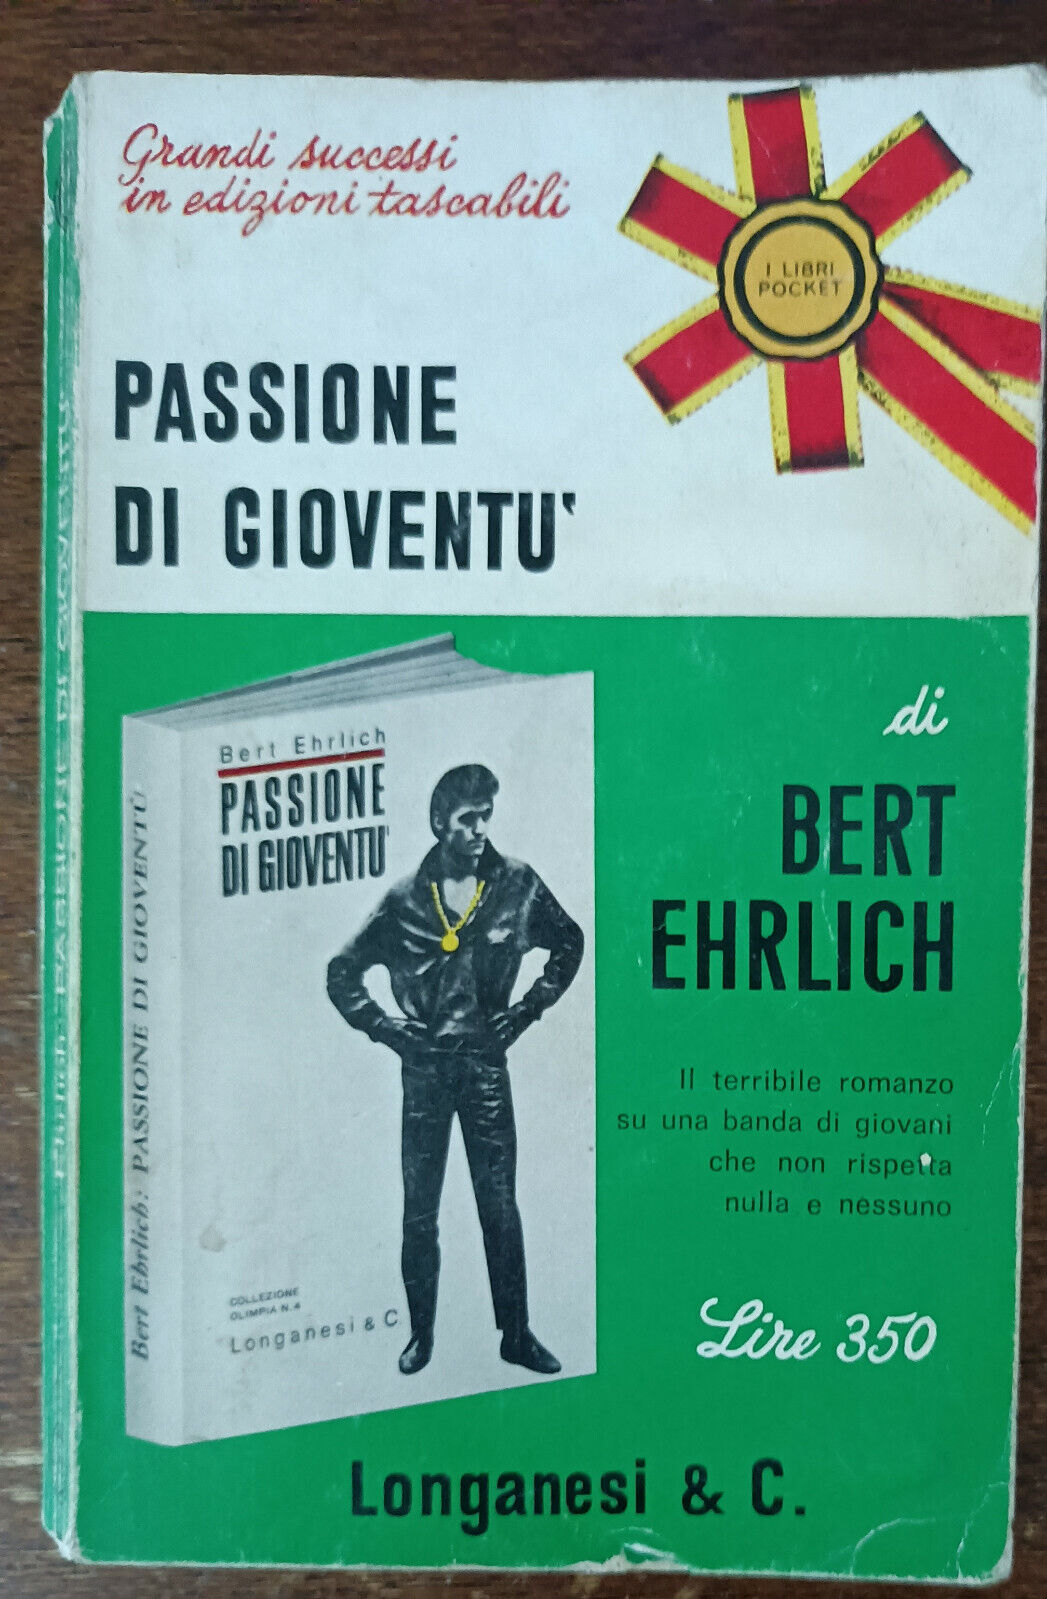 Passione di giovent? - Bert Ehrlich - Longanesi & C., 1969 - A